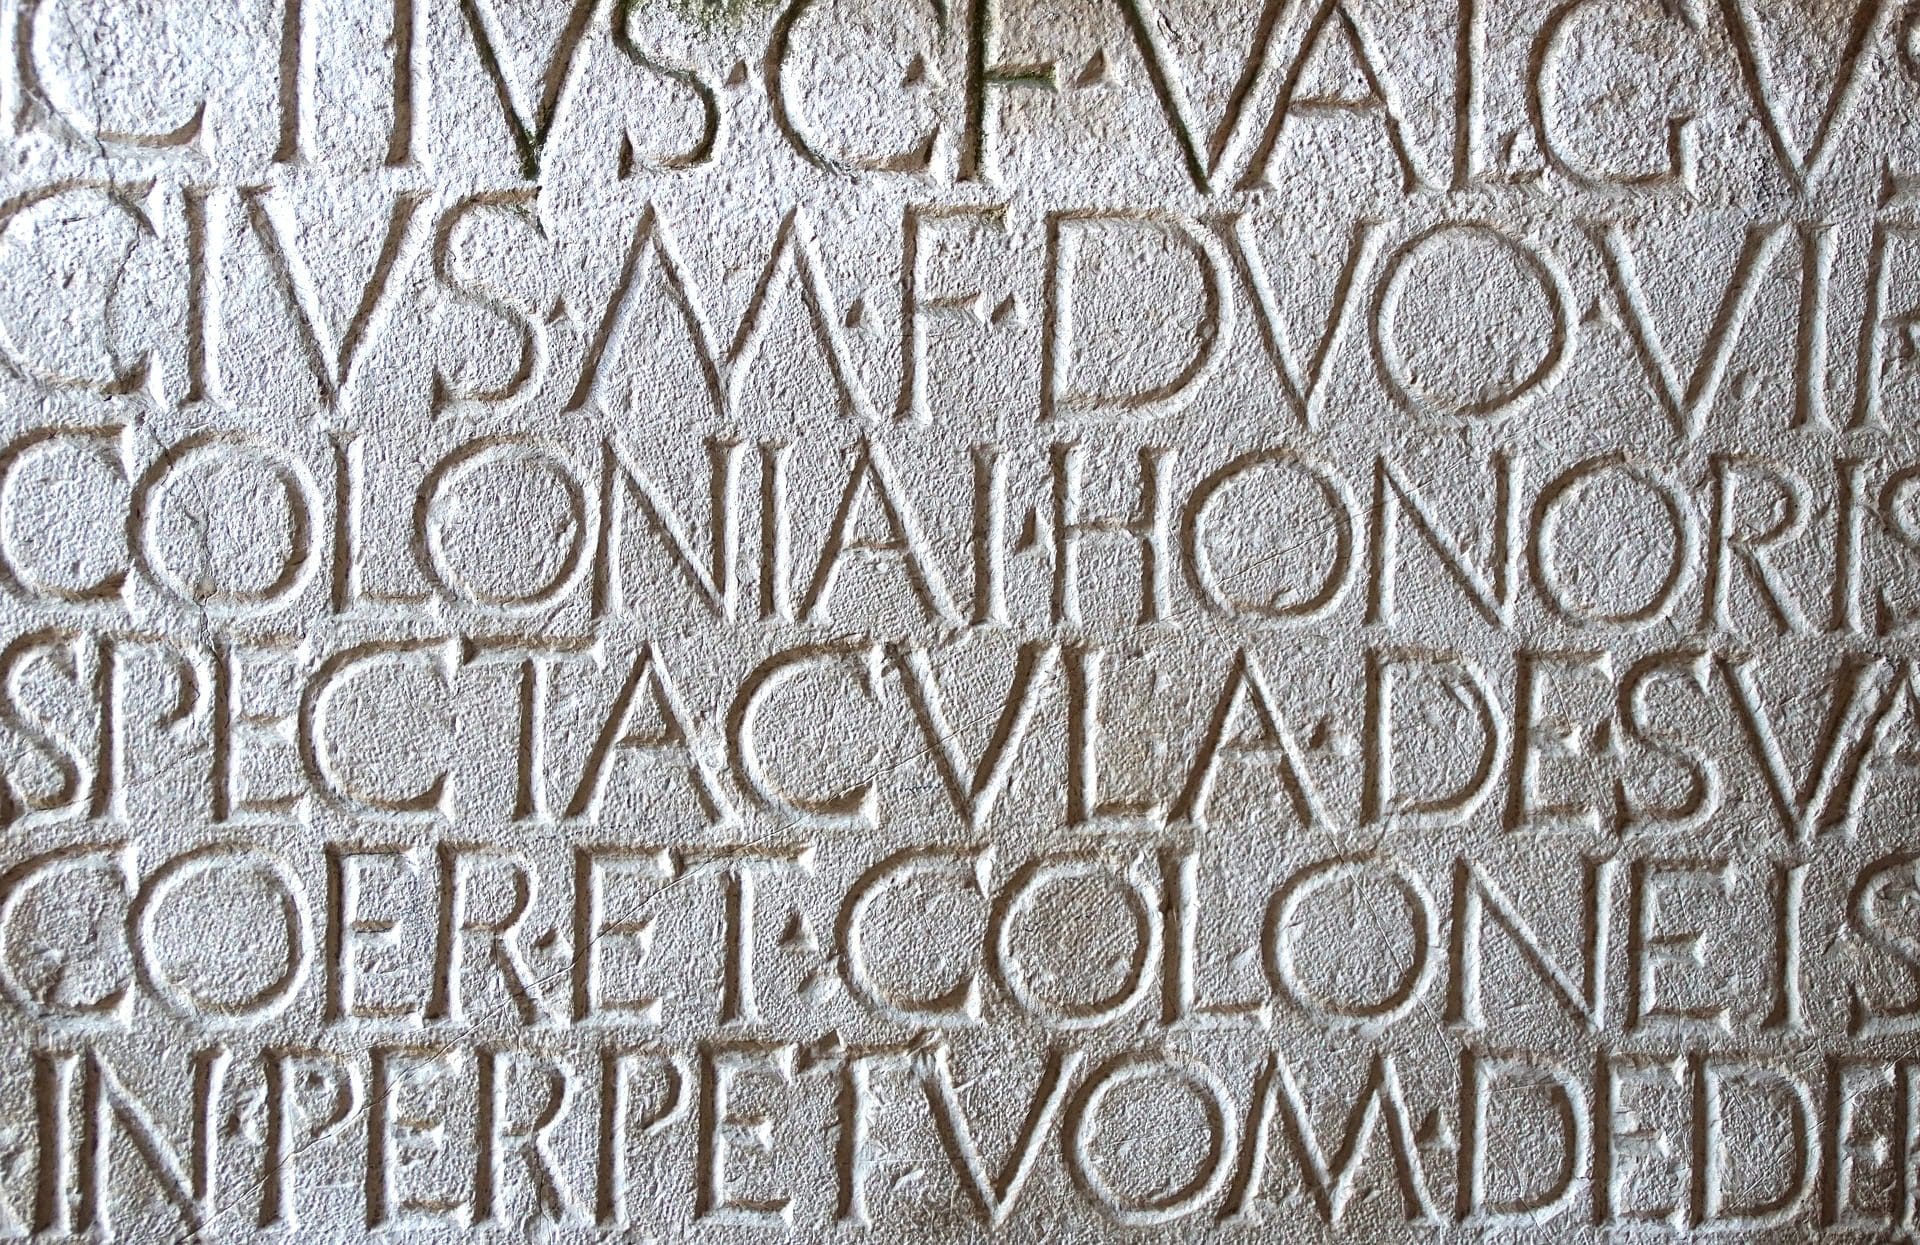 Inscription from Pompeii